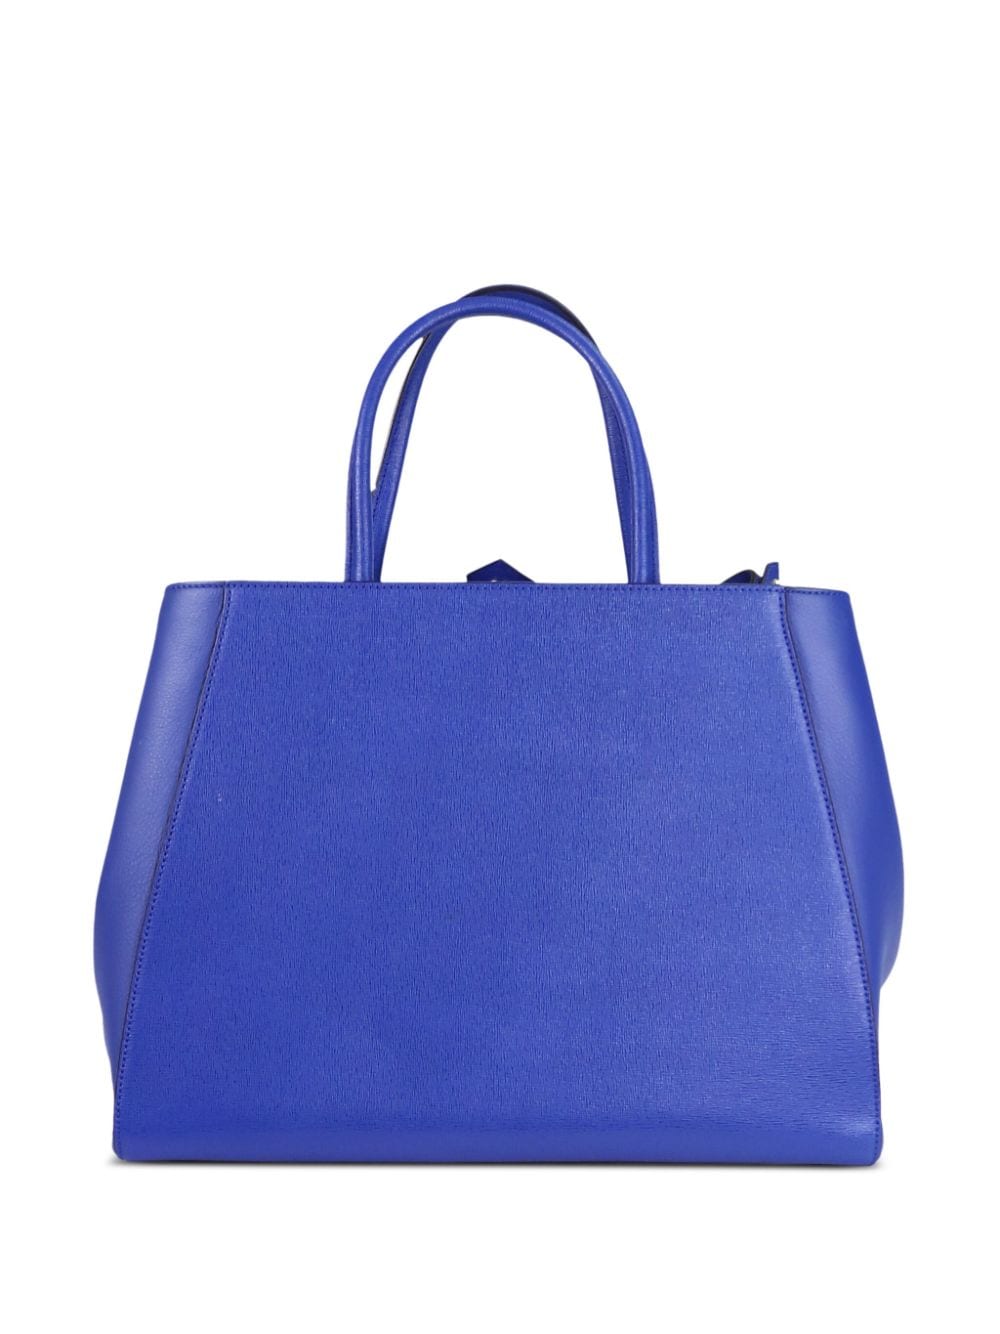 Fendi Pre-Owned 2Jours top handle bag - Blauw